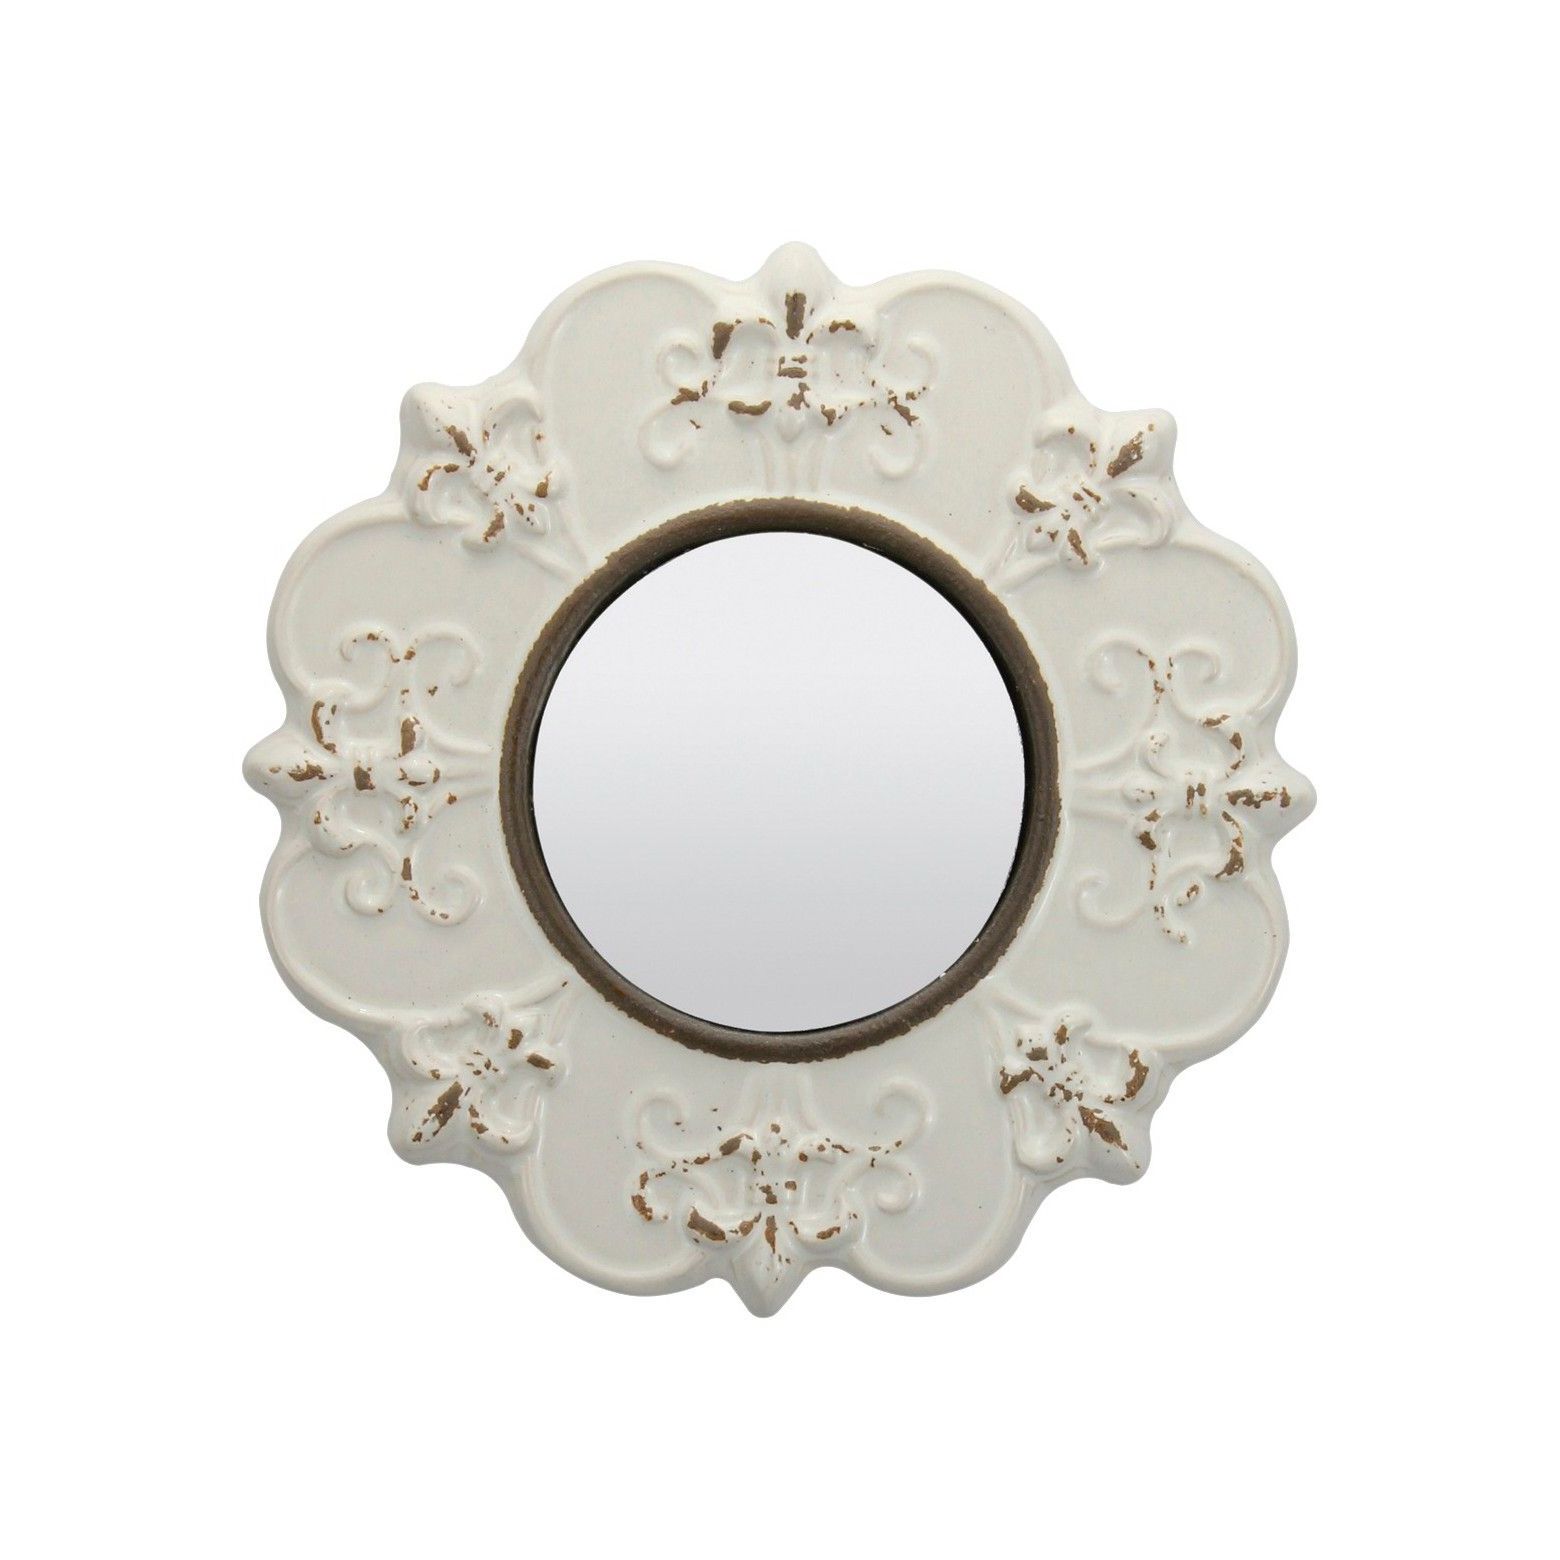 Round Decorative Wall Mirror Off White – Ckk Home Decor Within Recent Stitch White Round Wall Mirrors (View 9 of 15)